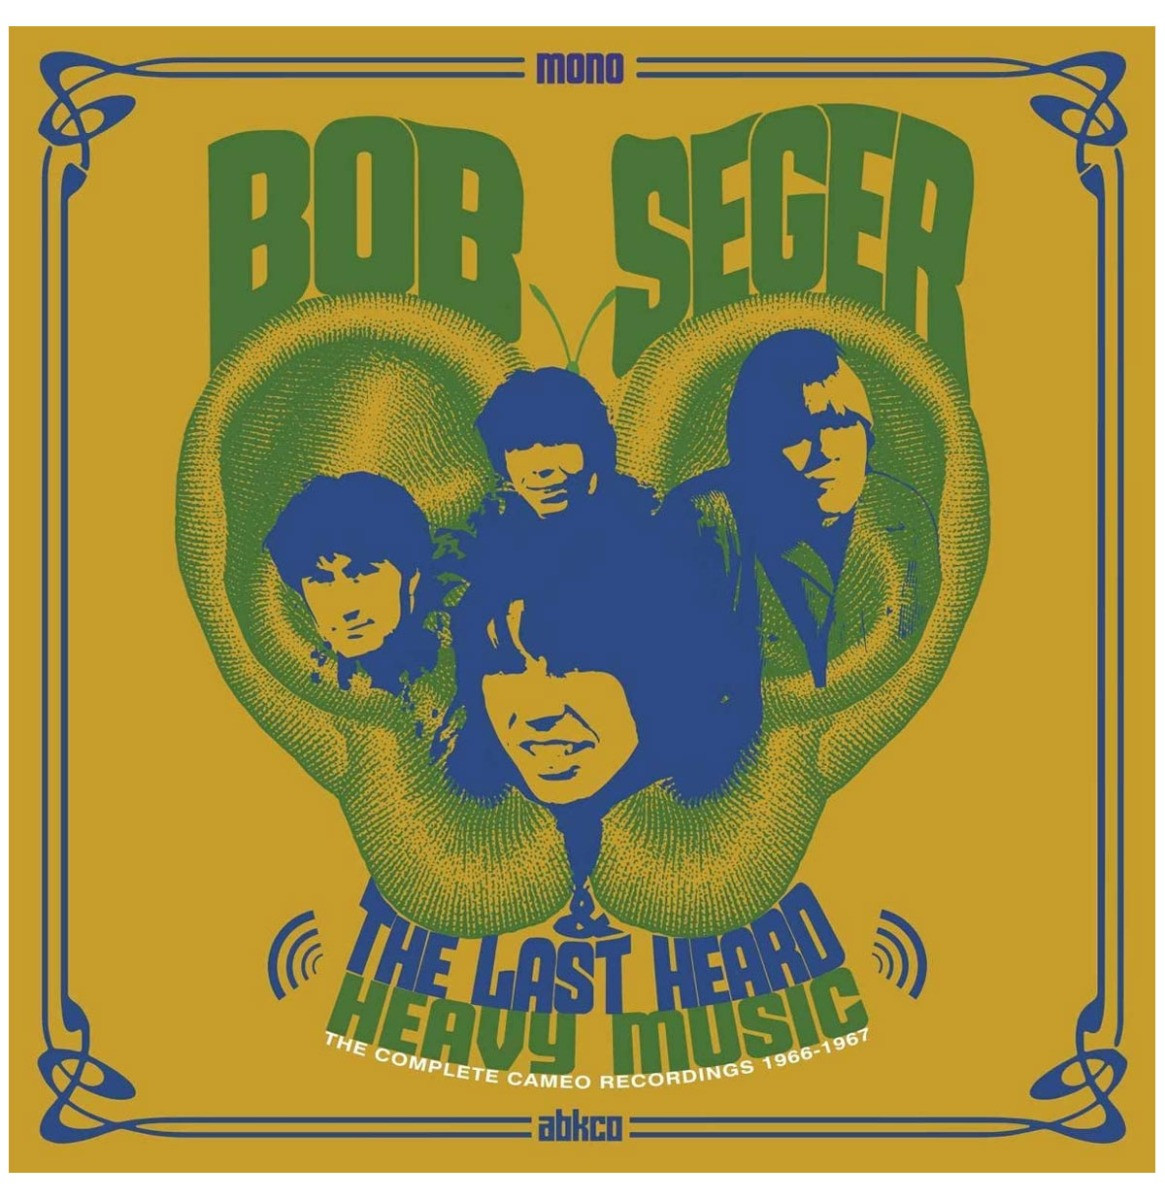 Bob Seger - Heavy Music The Complete Cameo Recordings 1966-1967 LP